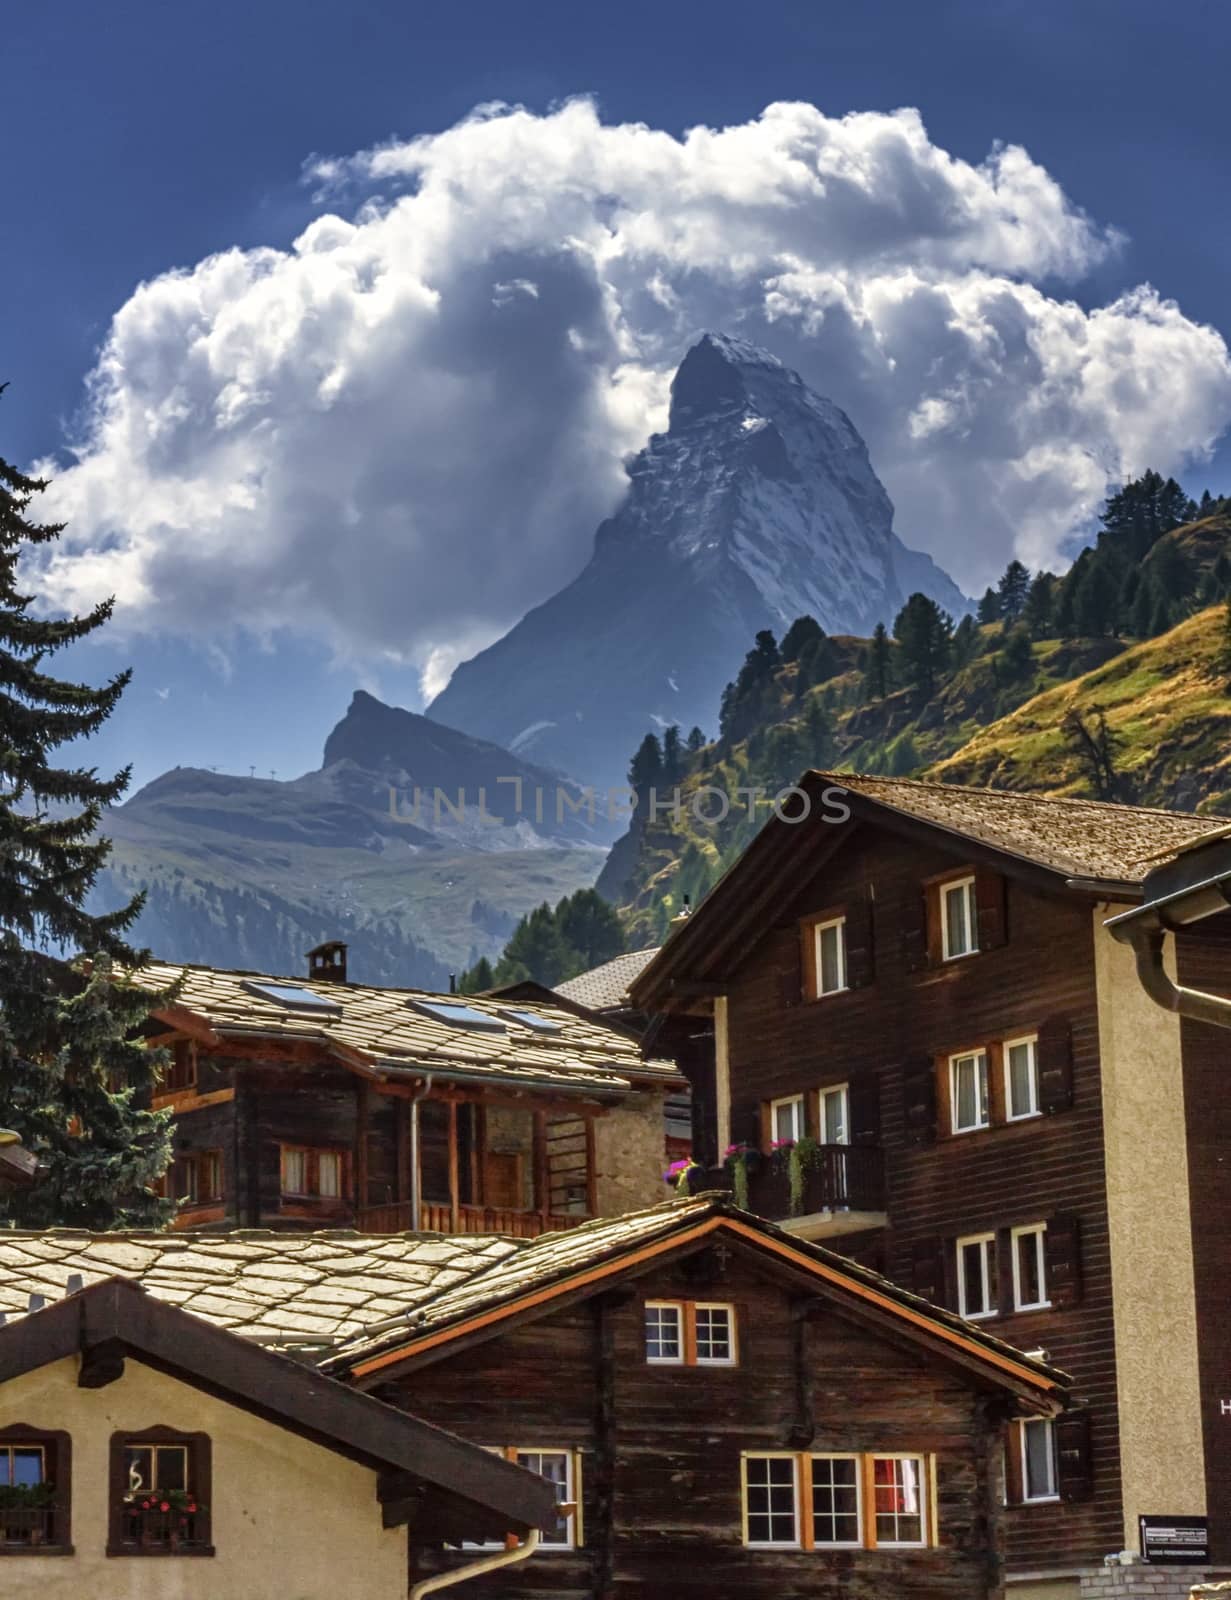 Matterhorn and Zermatt village houses, Switzerland by Elenaphotos21